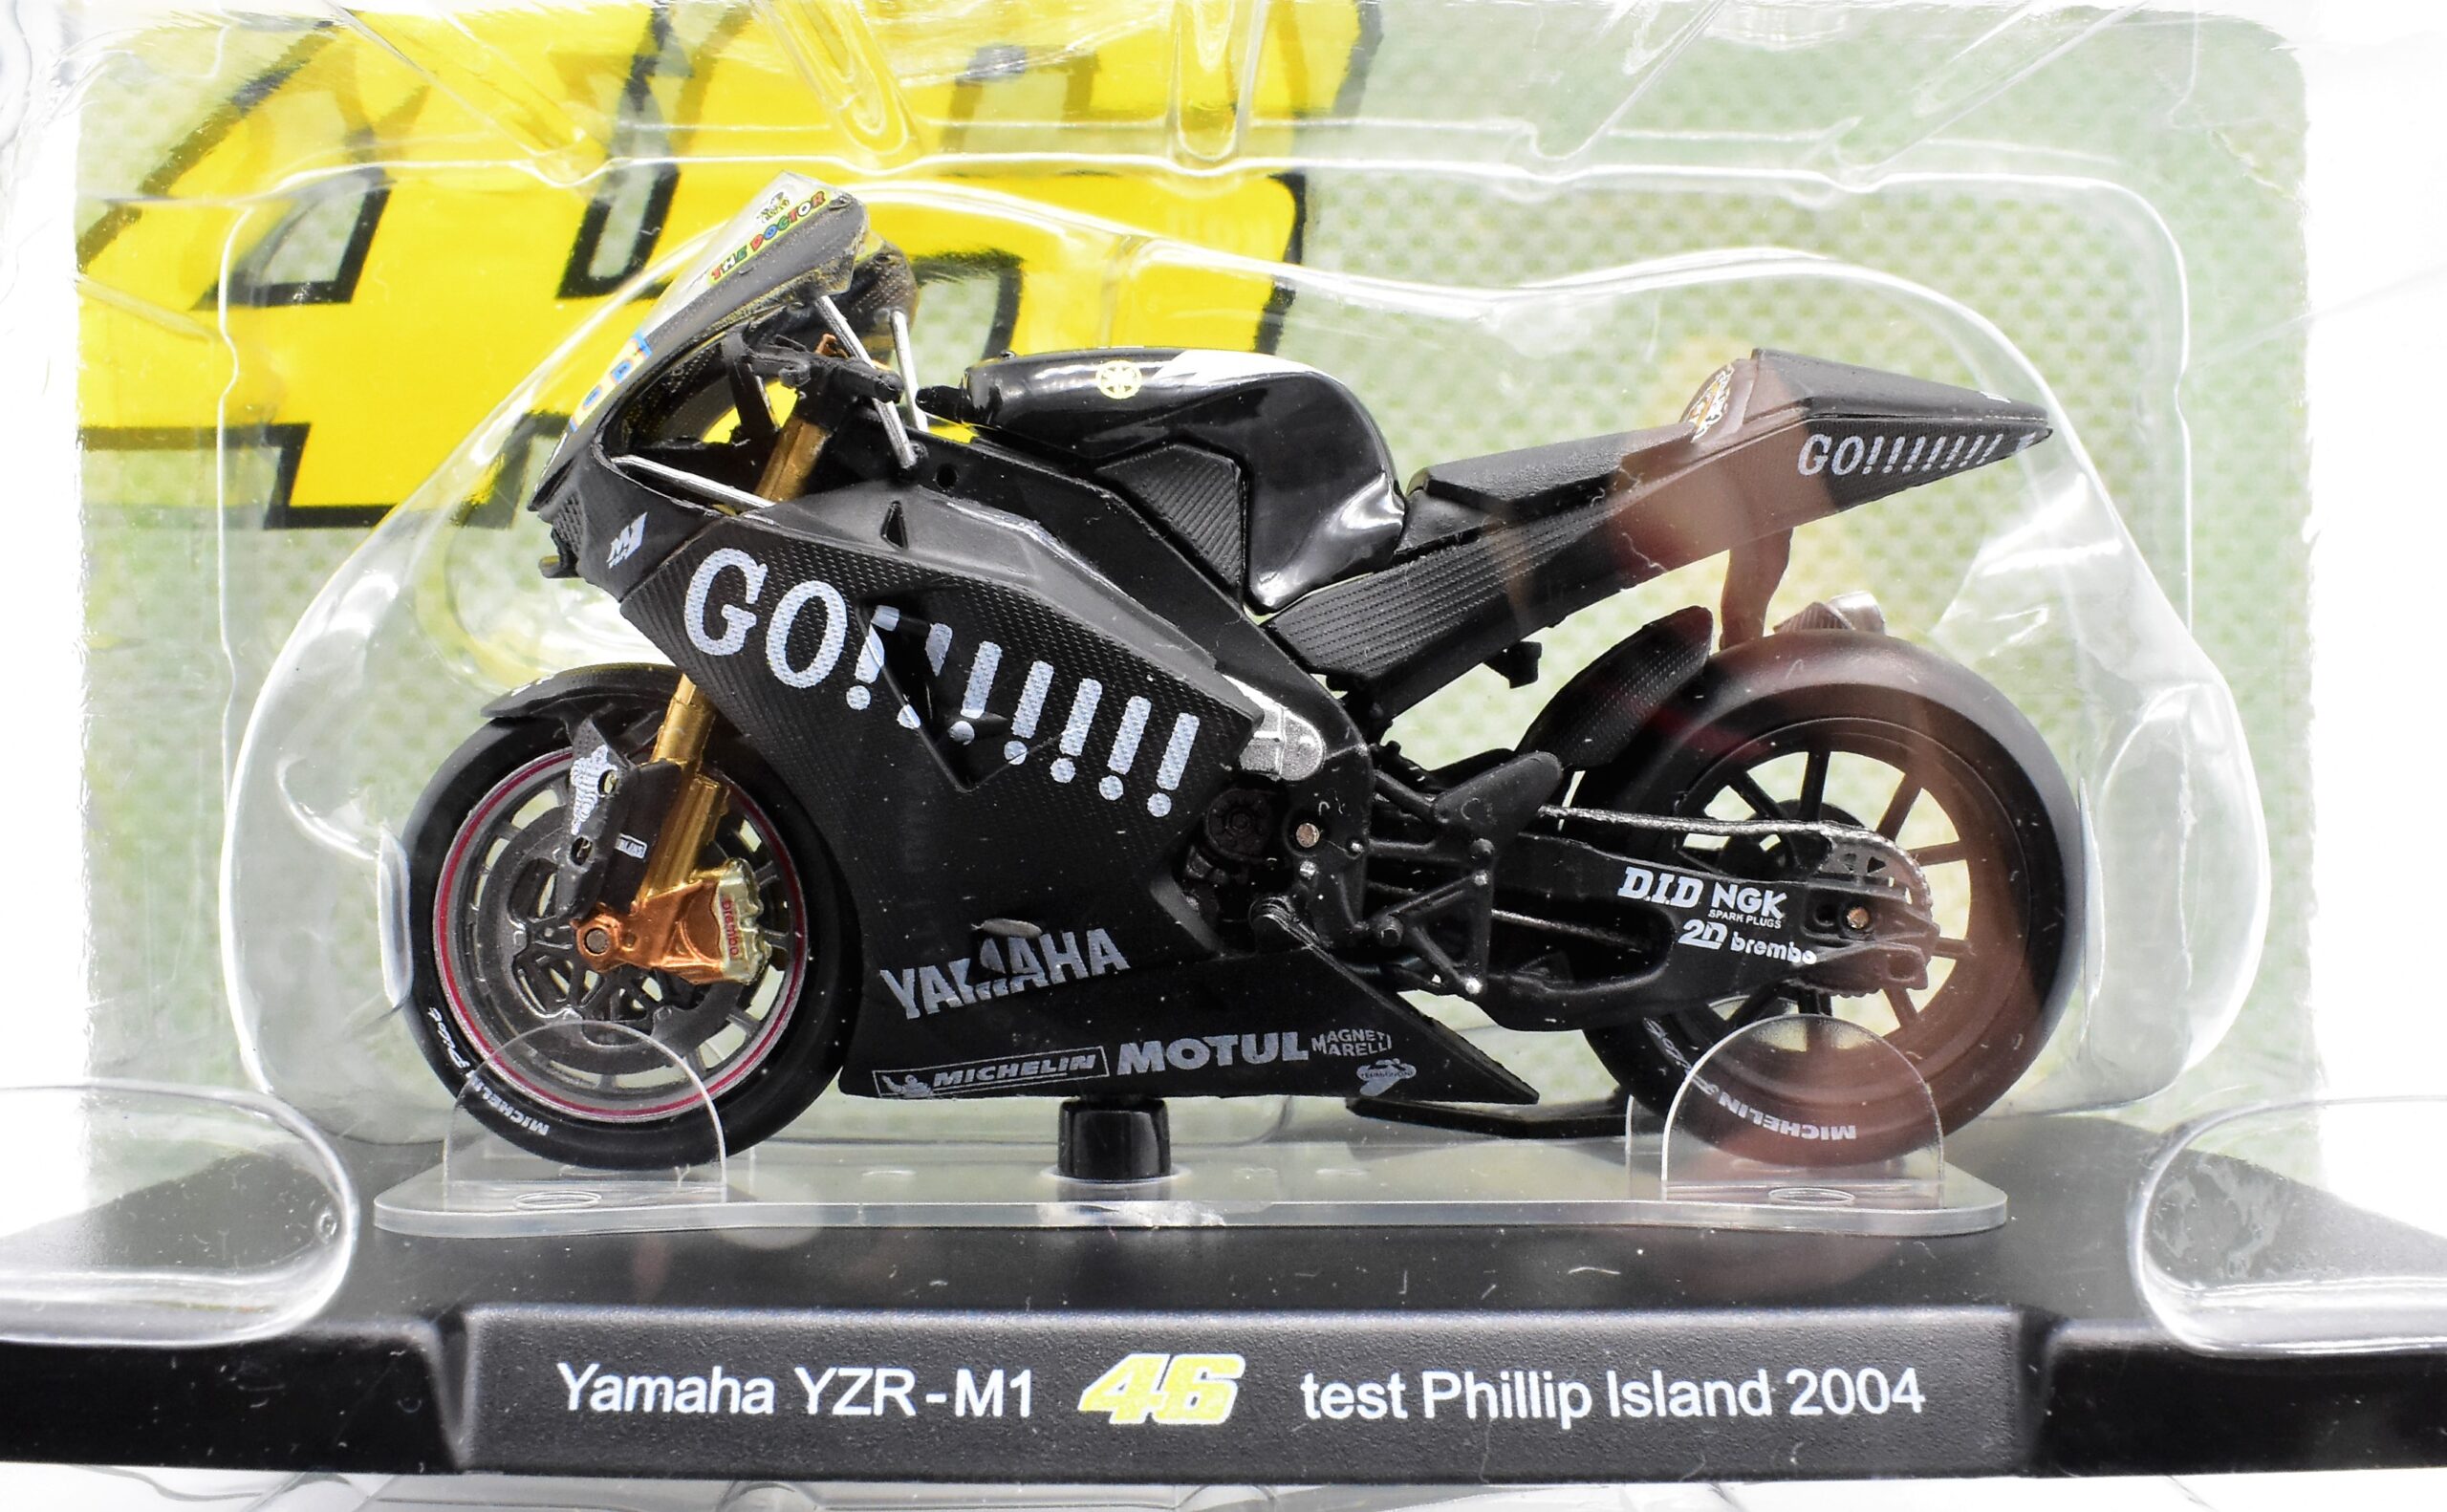 Modellini moto Valentino Rossi 1:18 YAMAHA YZR-M1 gp motor bike - Arcadia  Modellismo